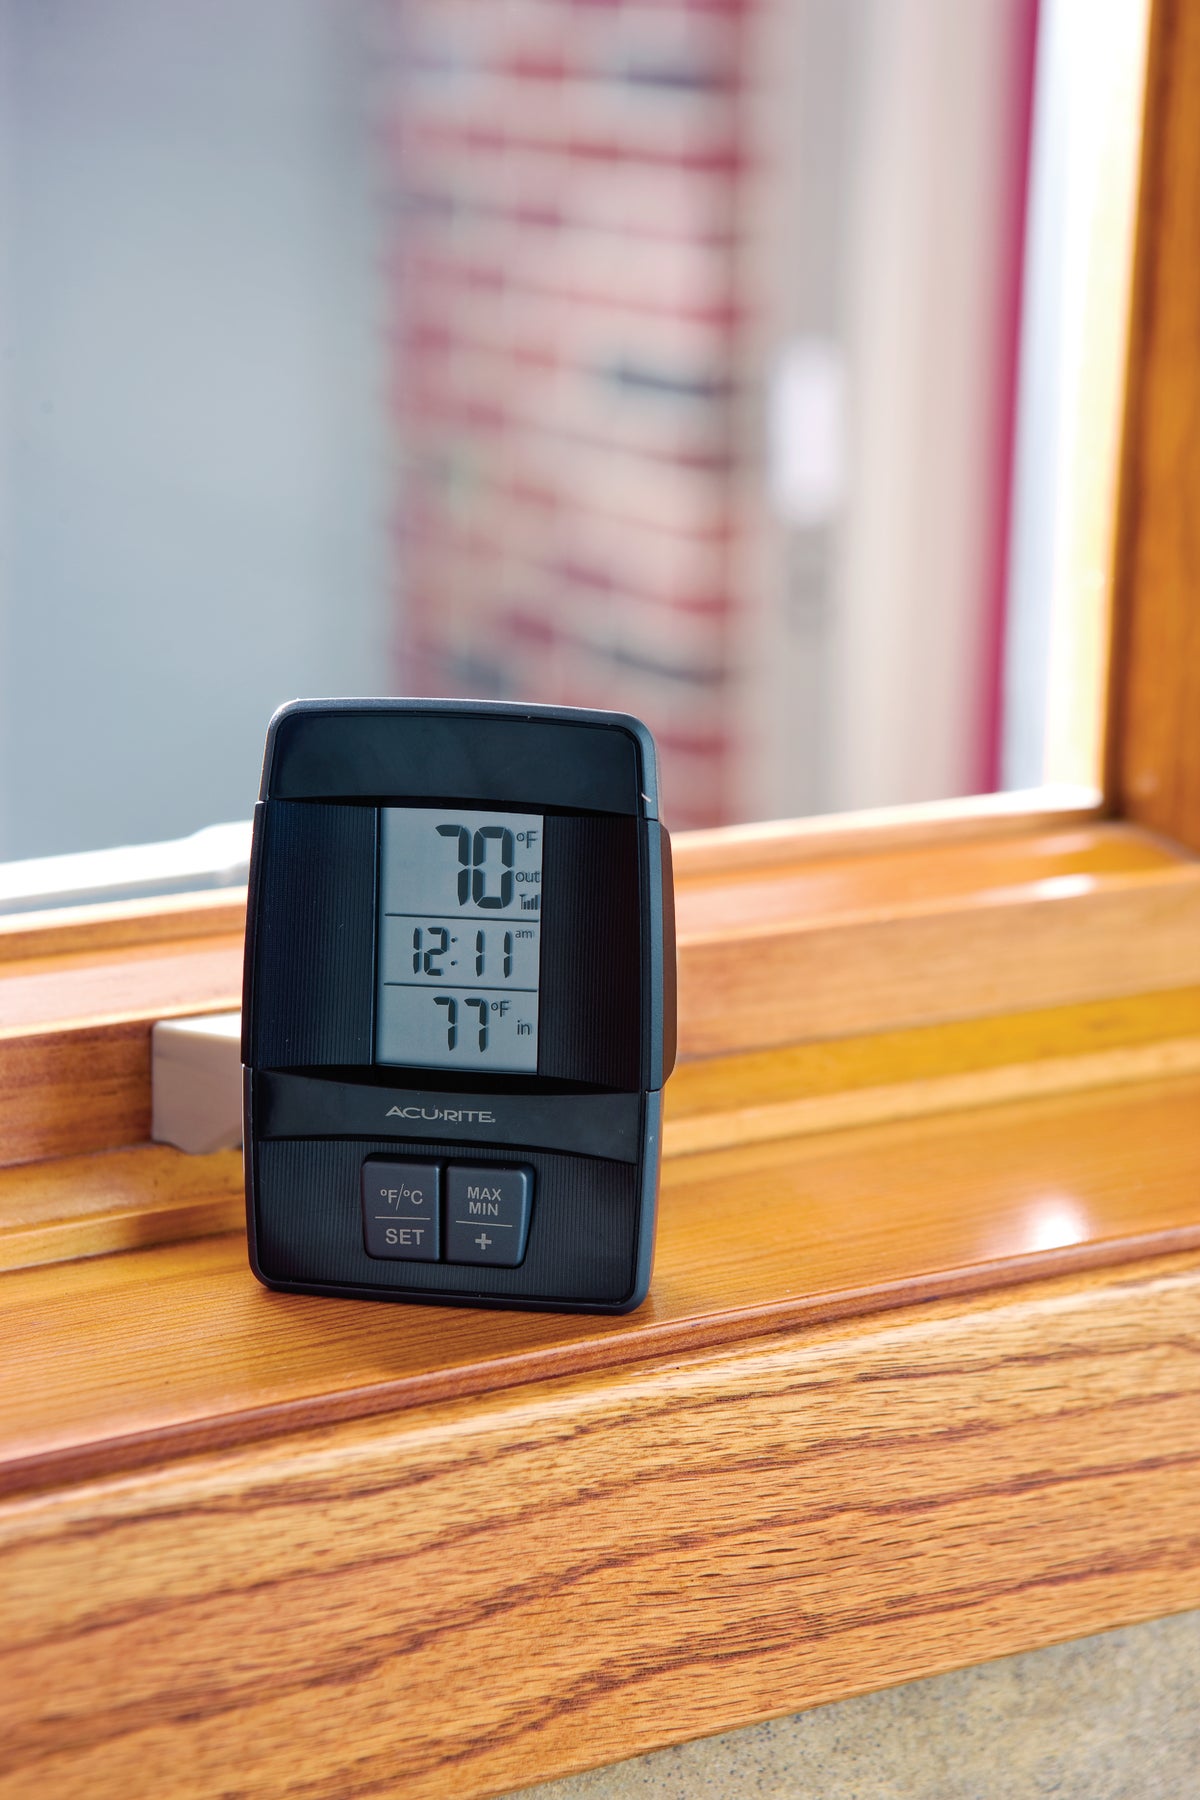 Acurite -4 deg F to 158 deg Fahrenheit Black Window Thermometer